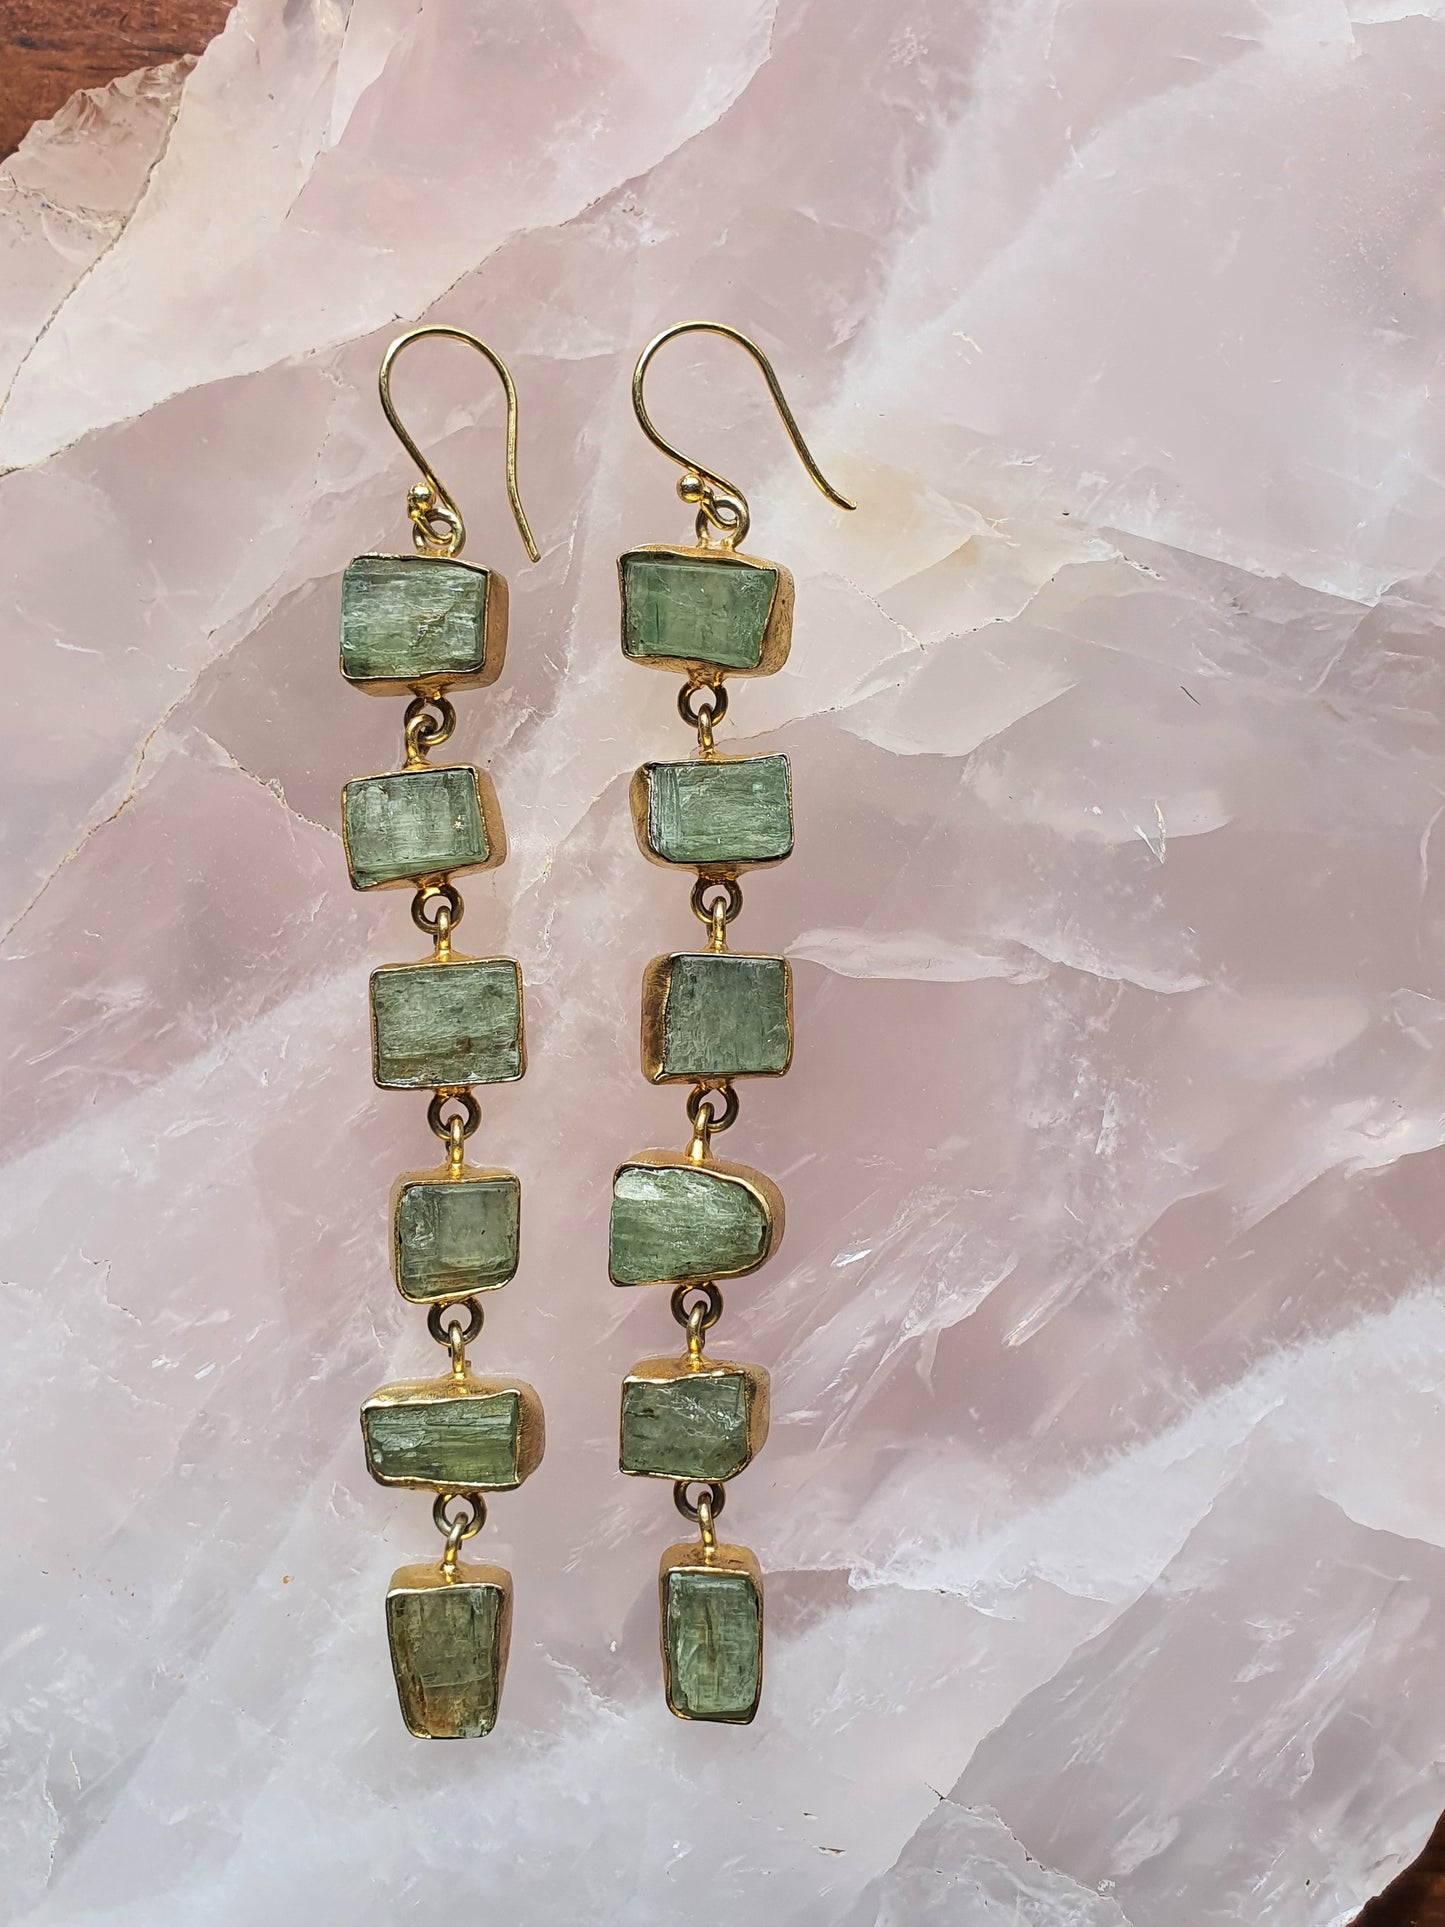 A pair of rough cut  6 drop earrings with green kyanite